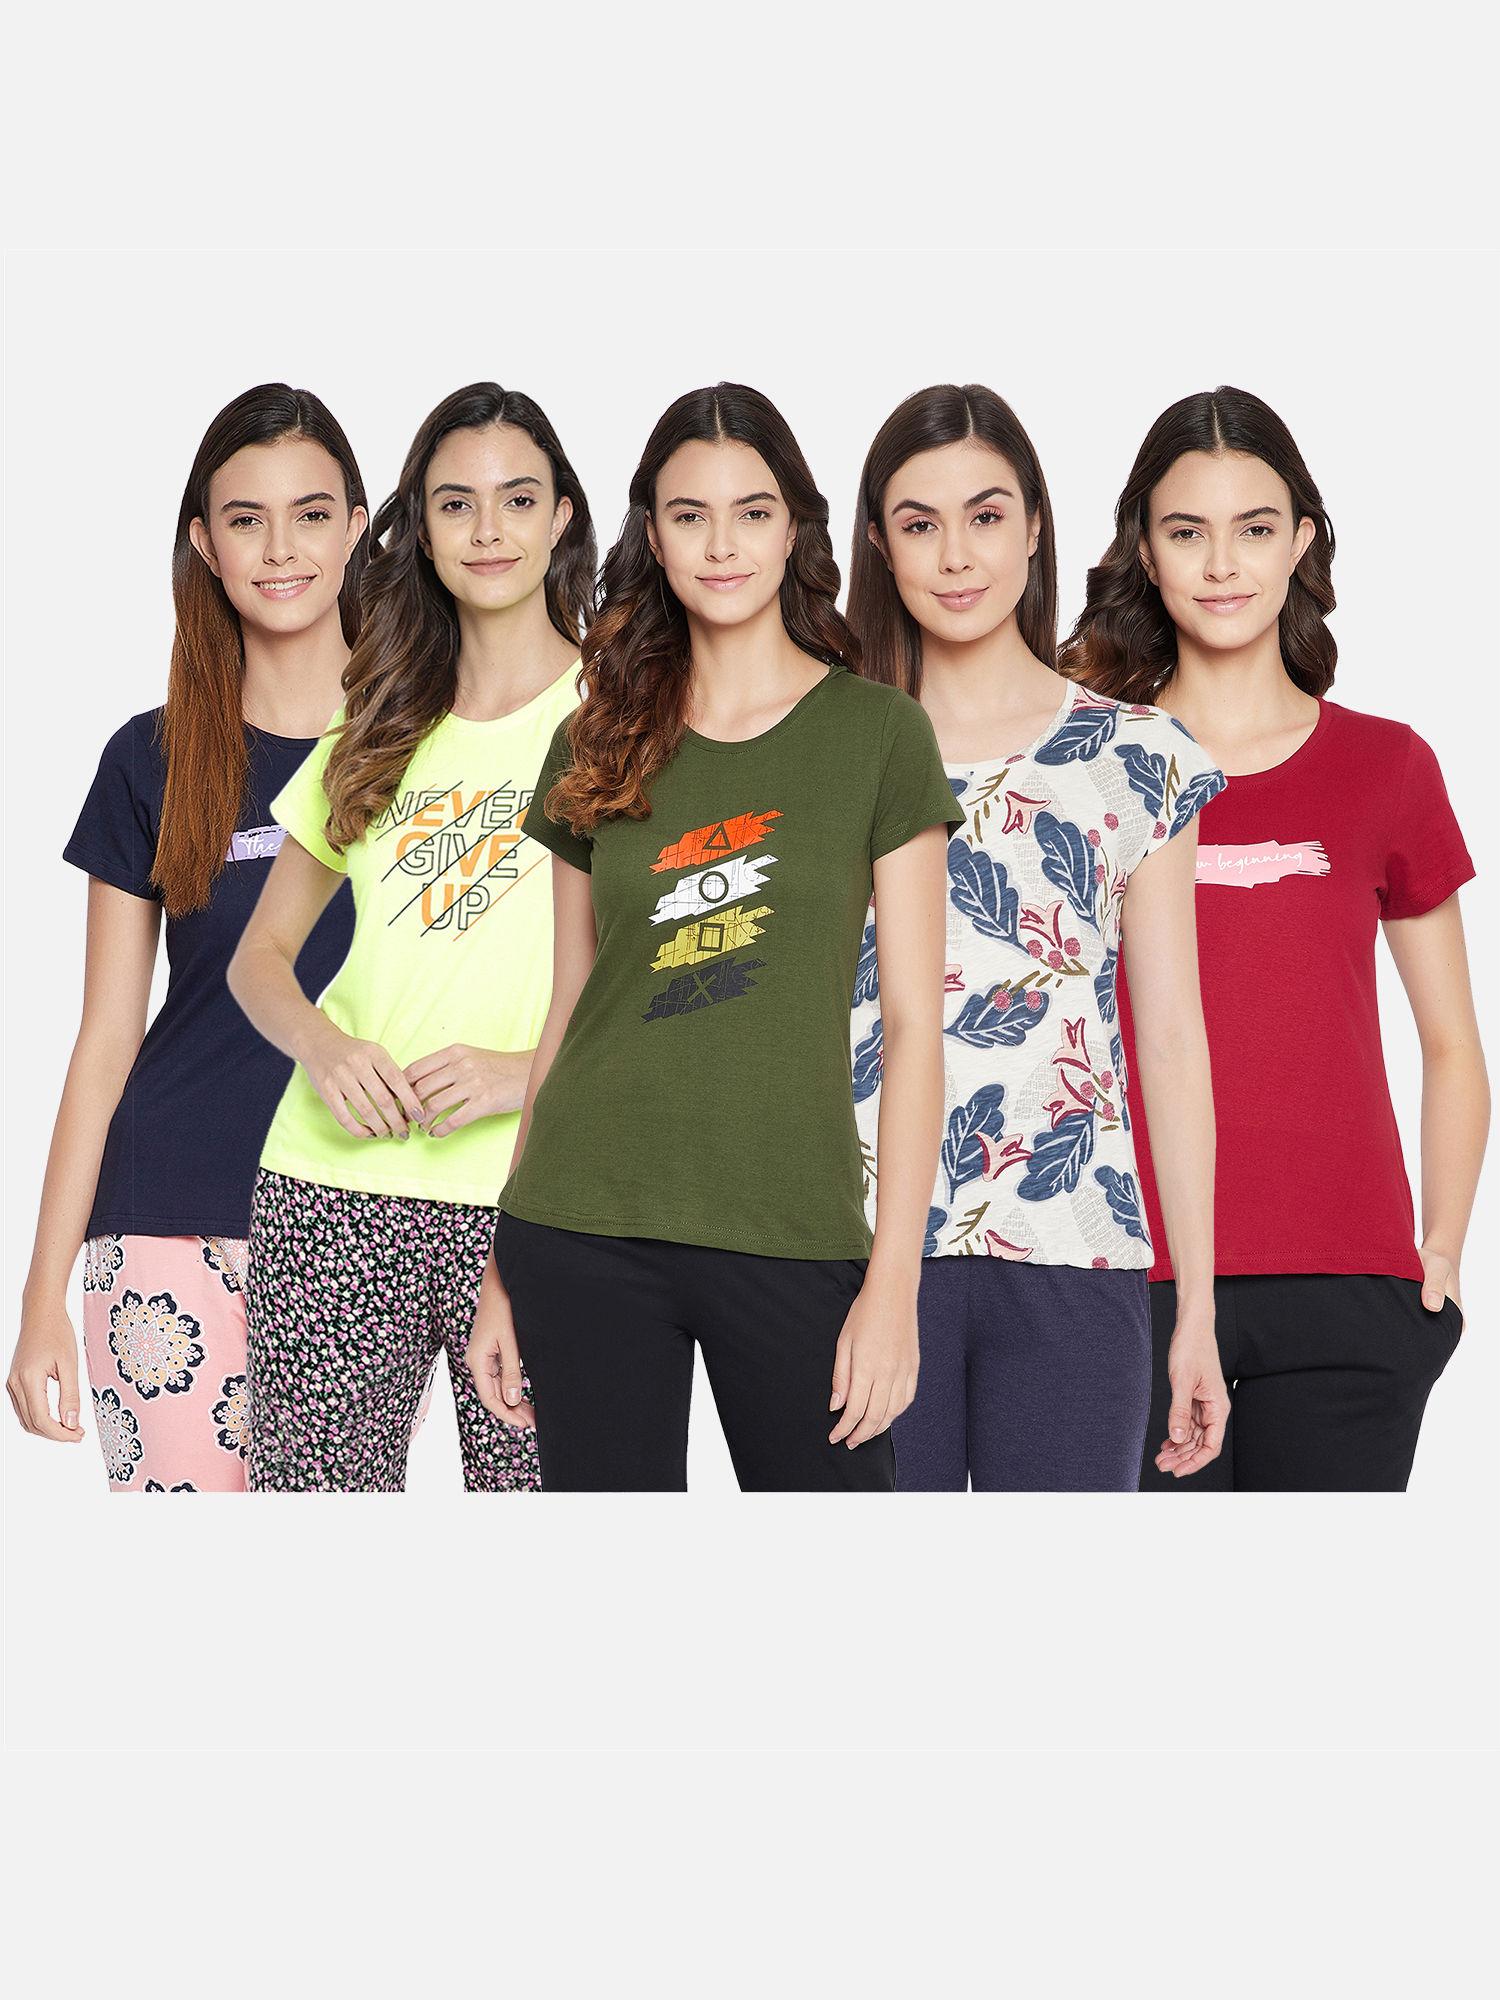 pack of 5 cotton assorted color & prints lounge t-shirt - multi-color